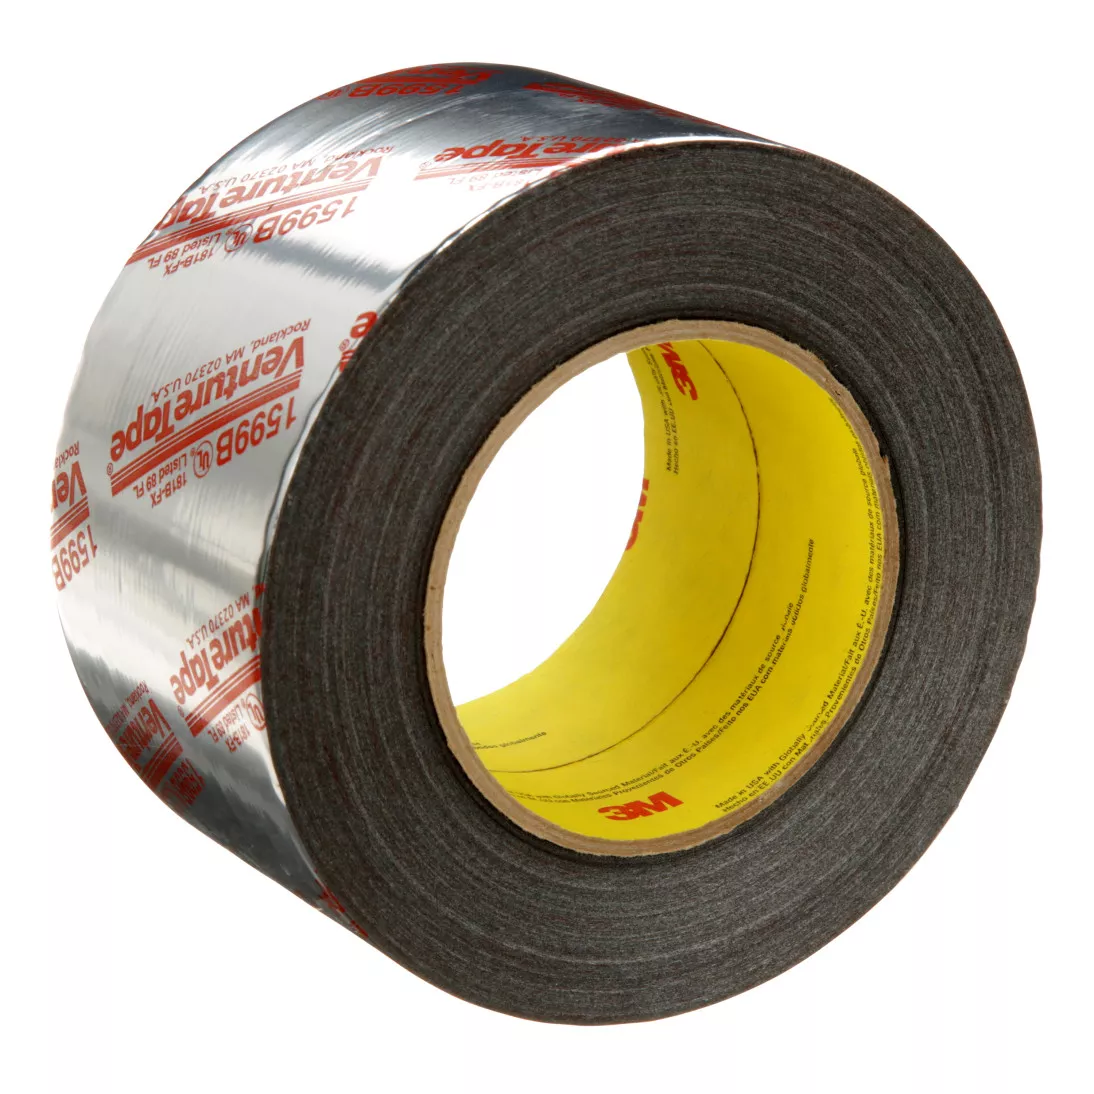 3M™ Venture Tape™ UL181B-FX Polypropylene Duct Tape 1599B, Silver, 72 mm
x 109.7 m, 3 mil, 16 rolls per case